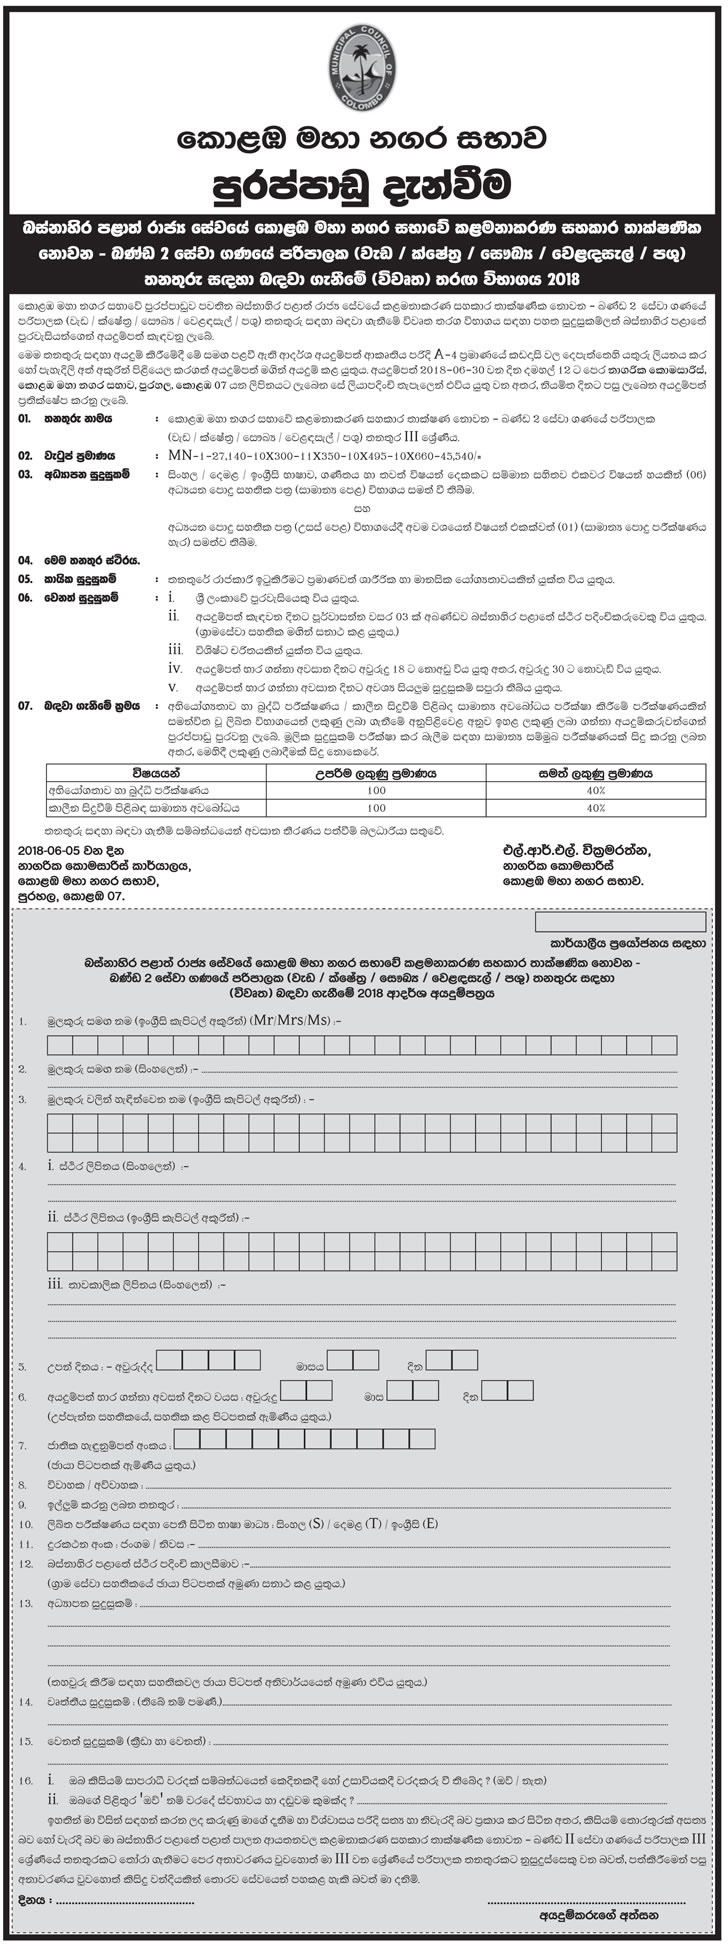 Supervisor (Health / Shops / Field Work / Veterinary) - Colombo Municipal Council Jobs Vacancies Application